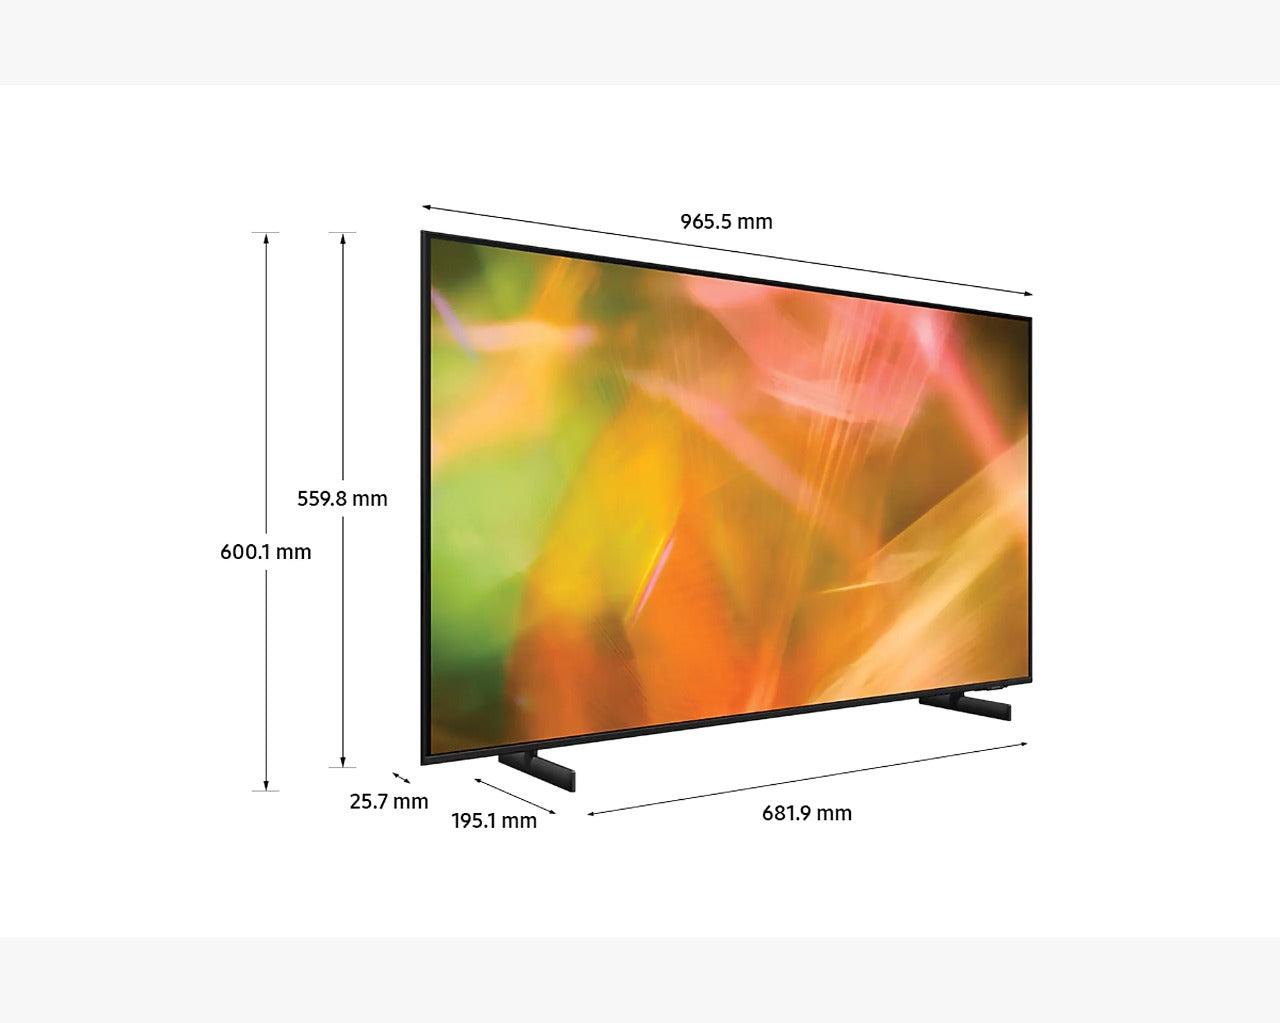 Samsung 2m 16cm AU8000 Crystal 4K UHD Smart TV